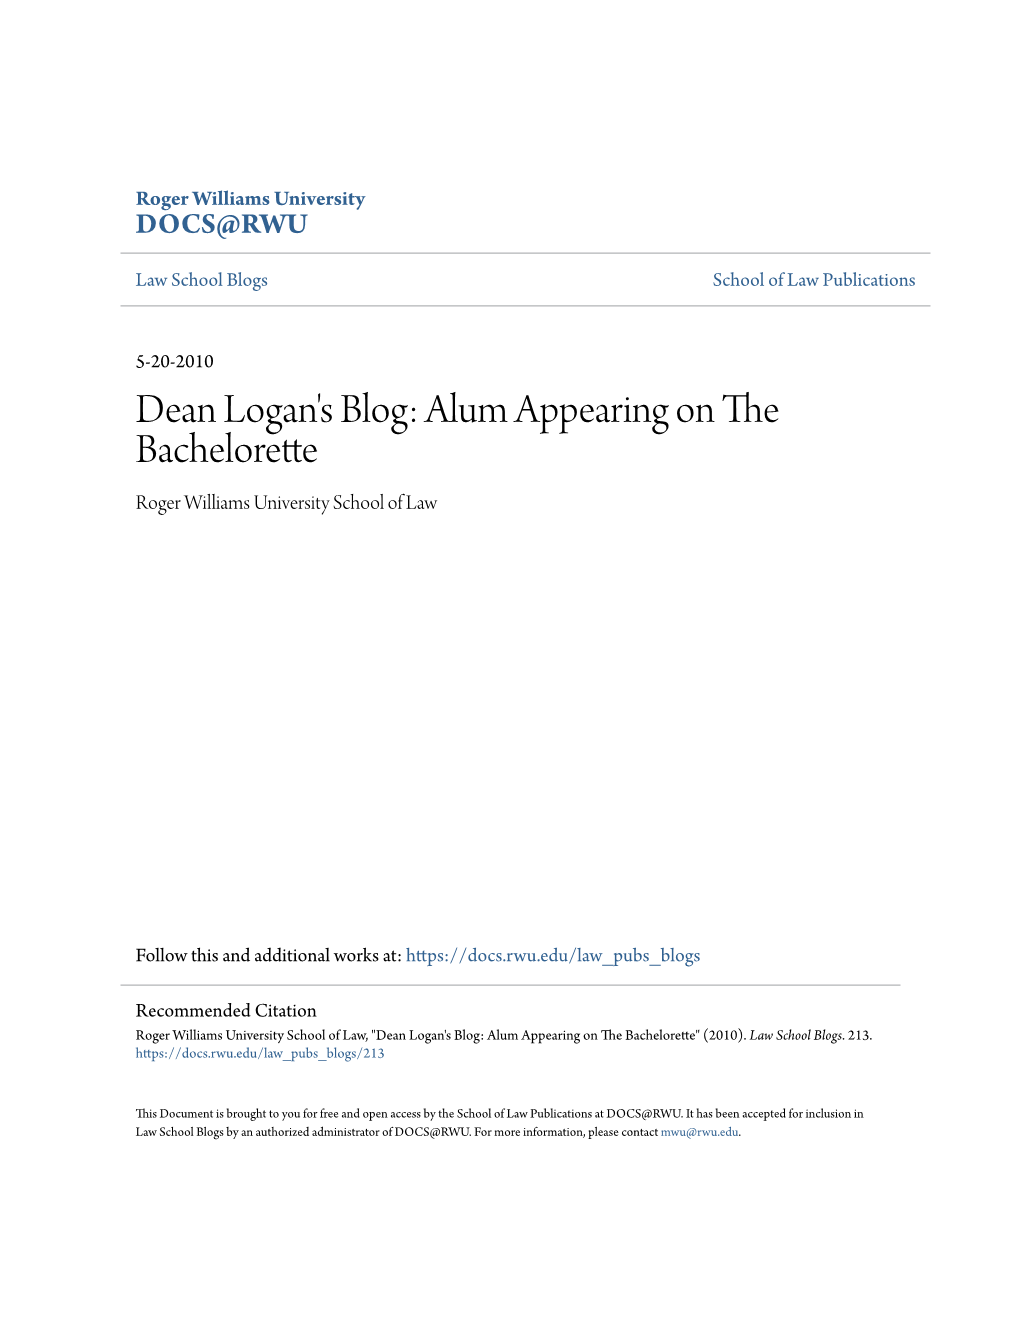 Dean Logan's Blog: Alum Appearing on the Bachelorette Roger Williams University School of Law